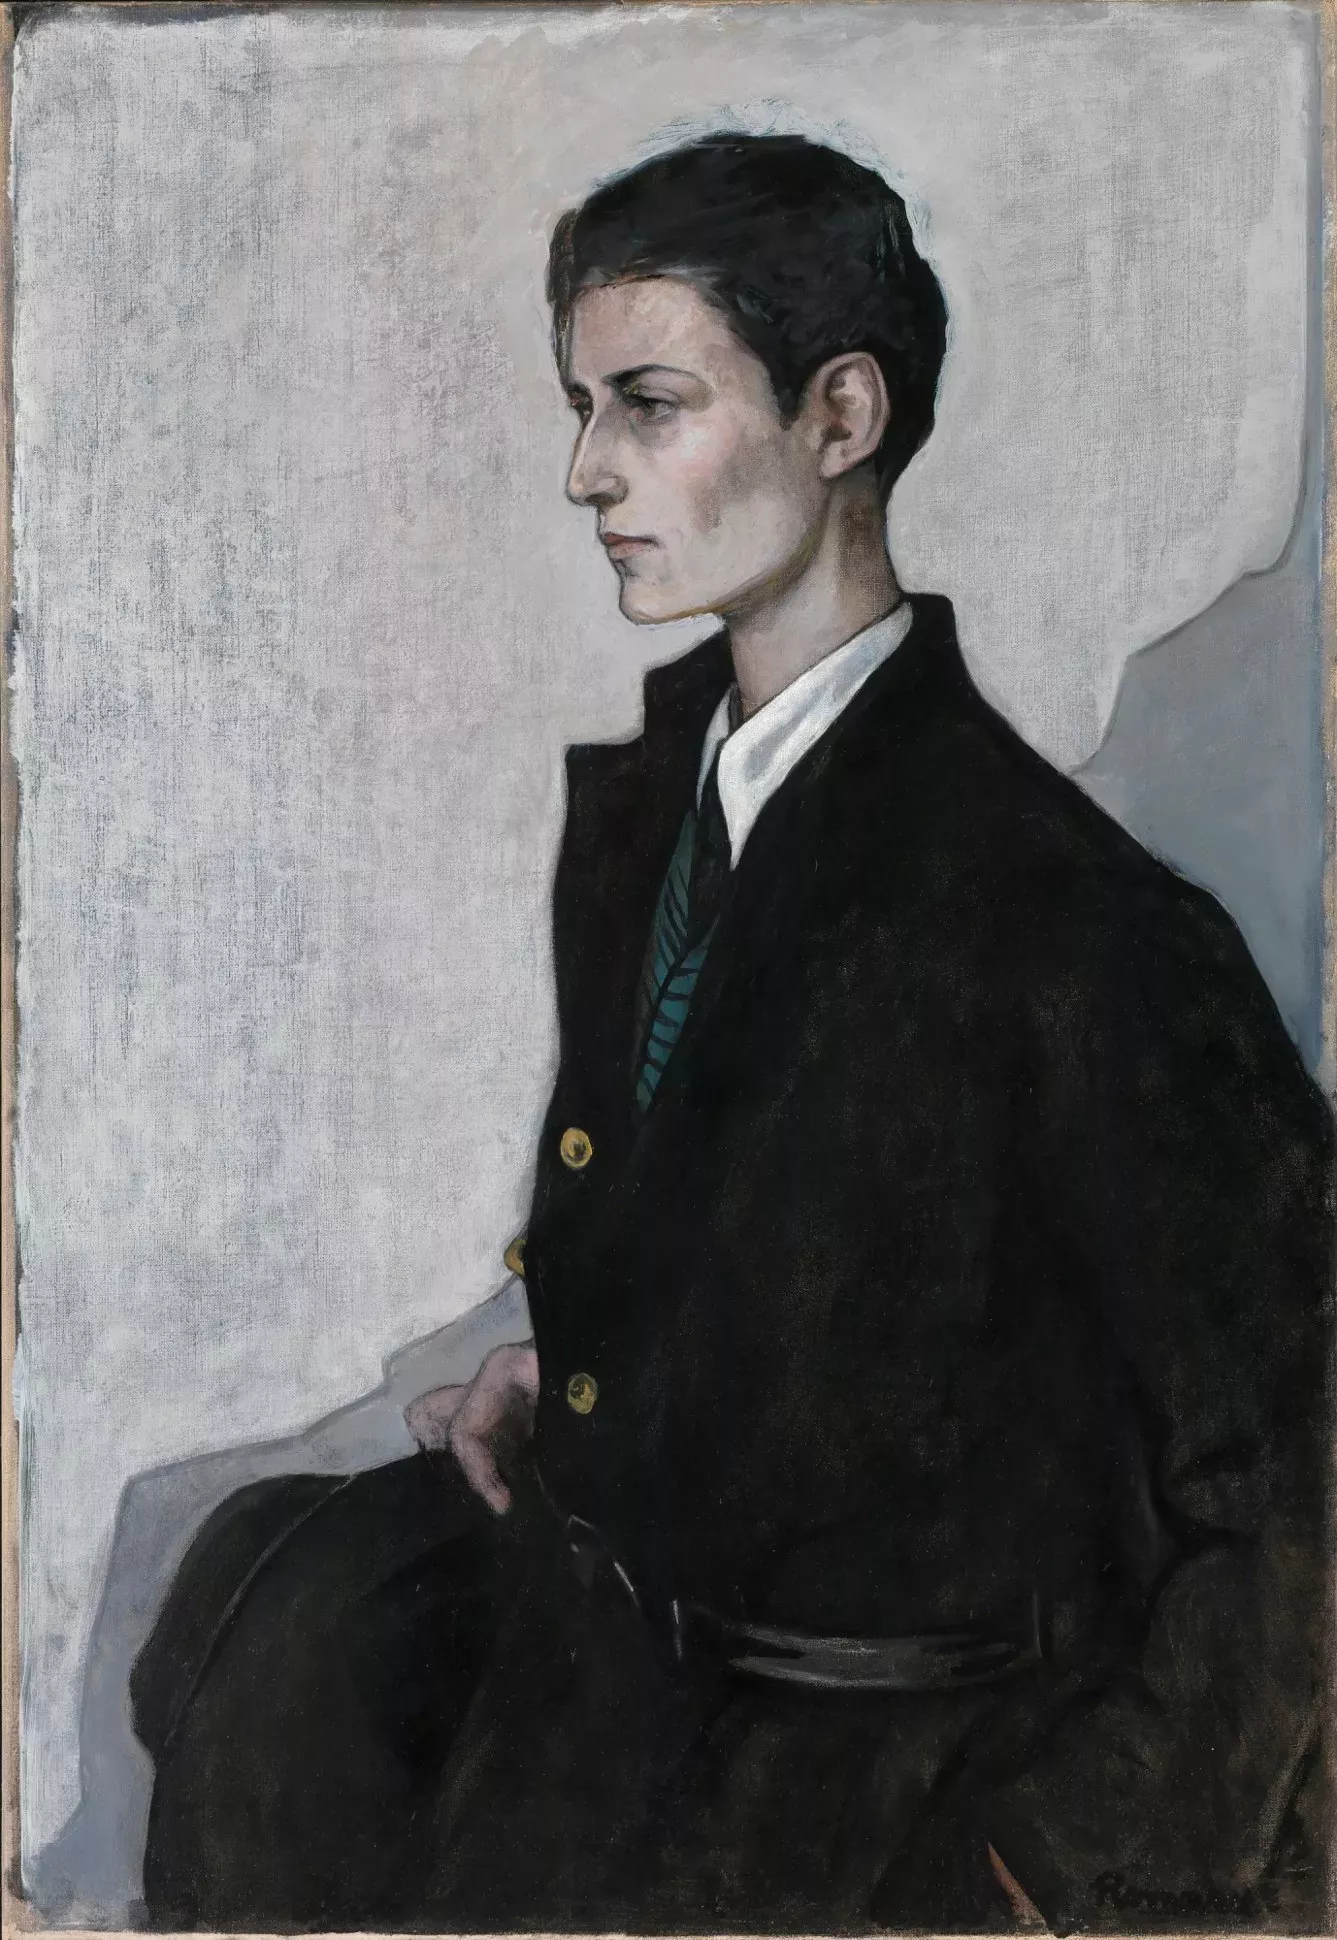 A portrait of the painter Gluck